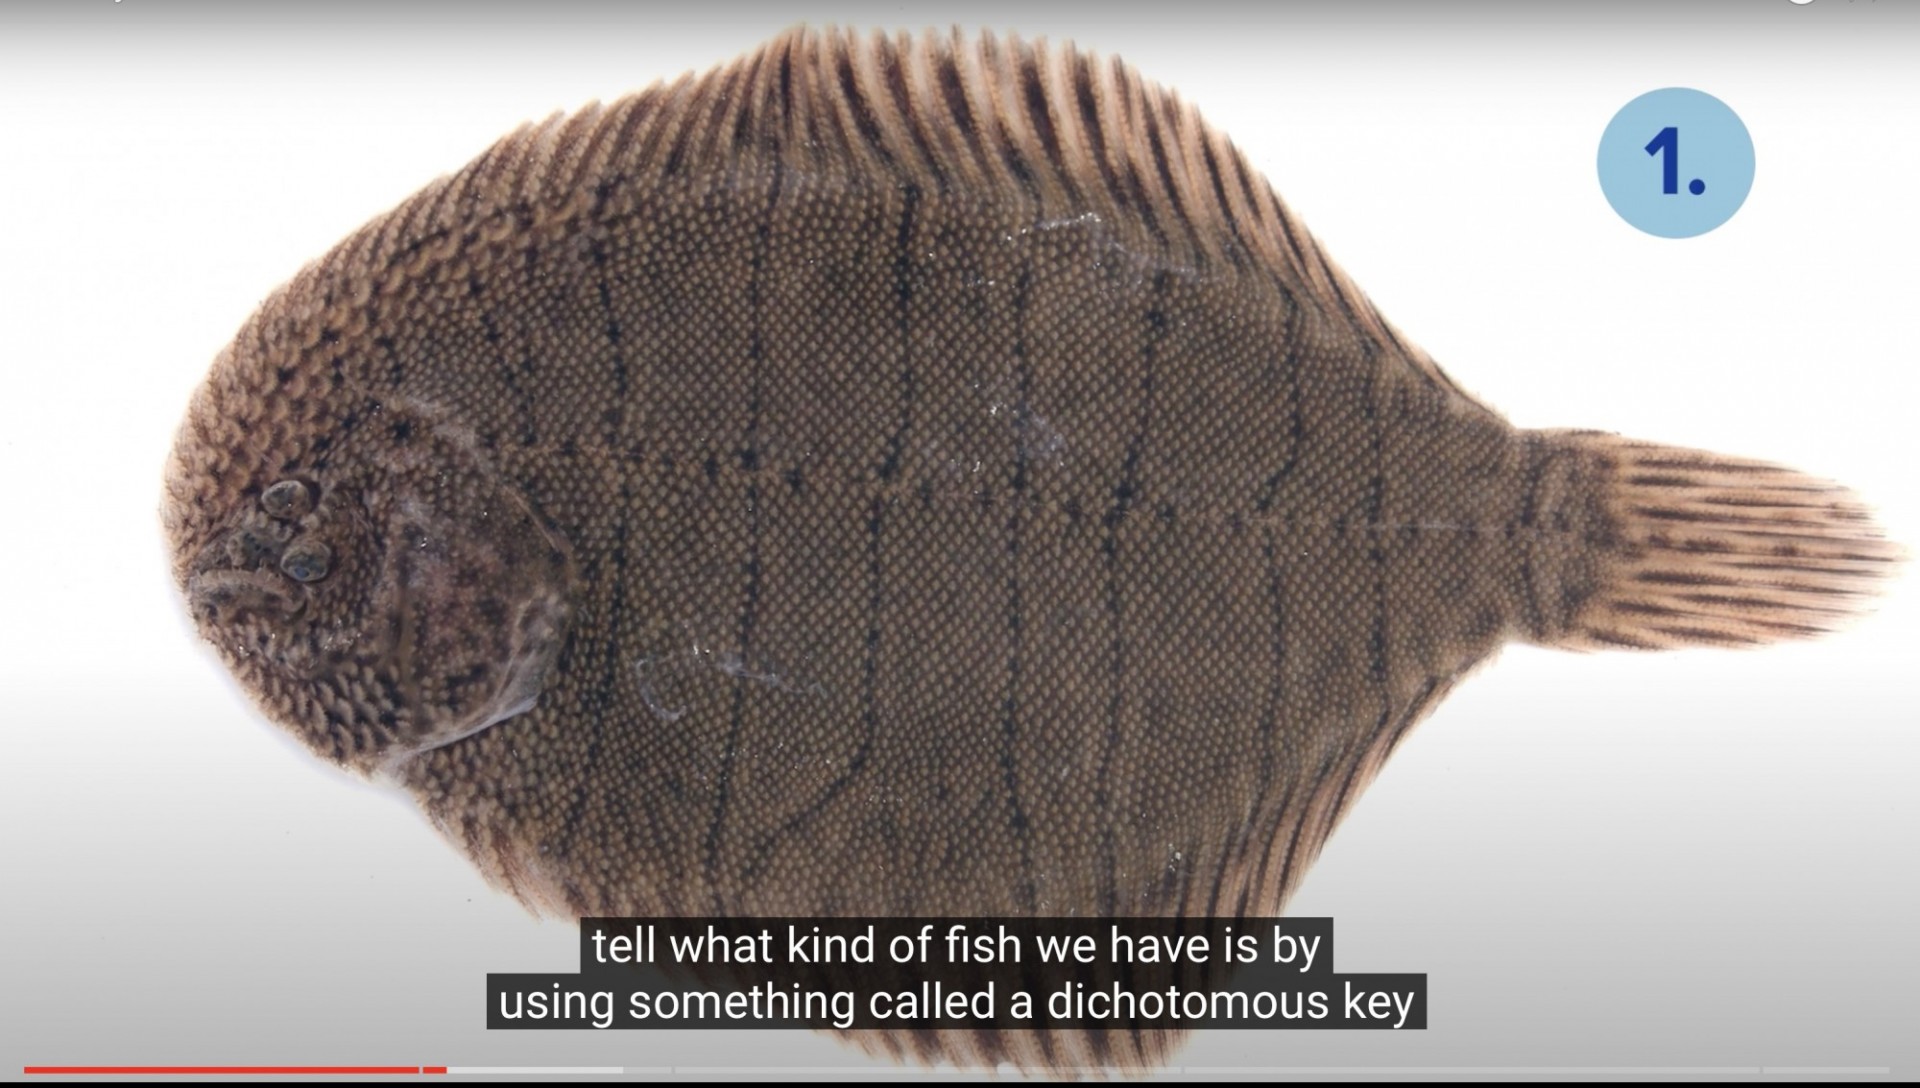 Hogchoker Fish